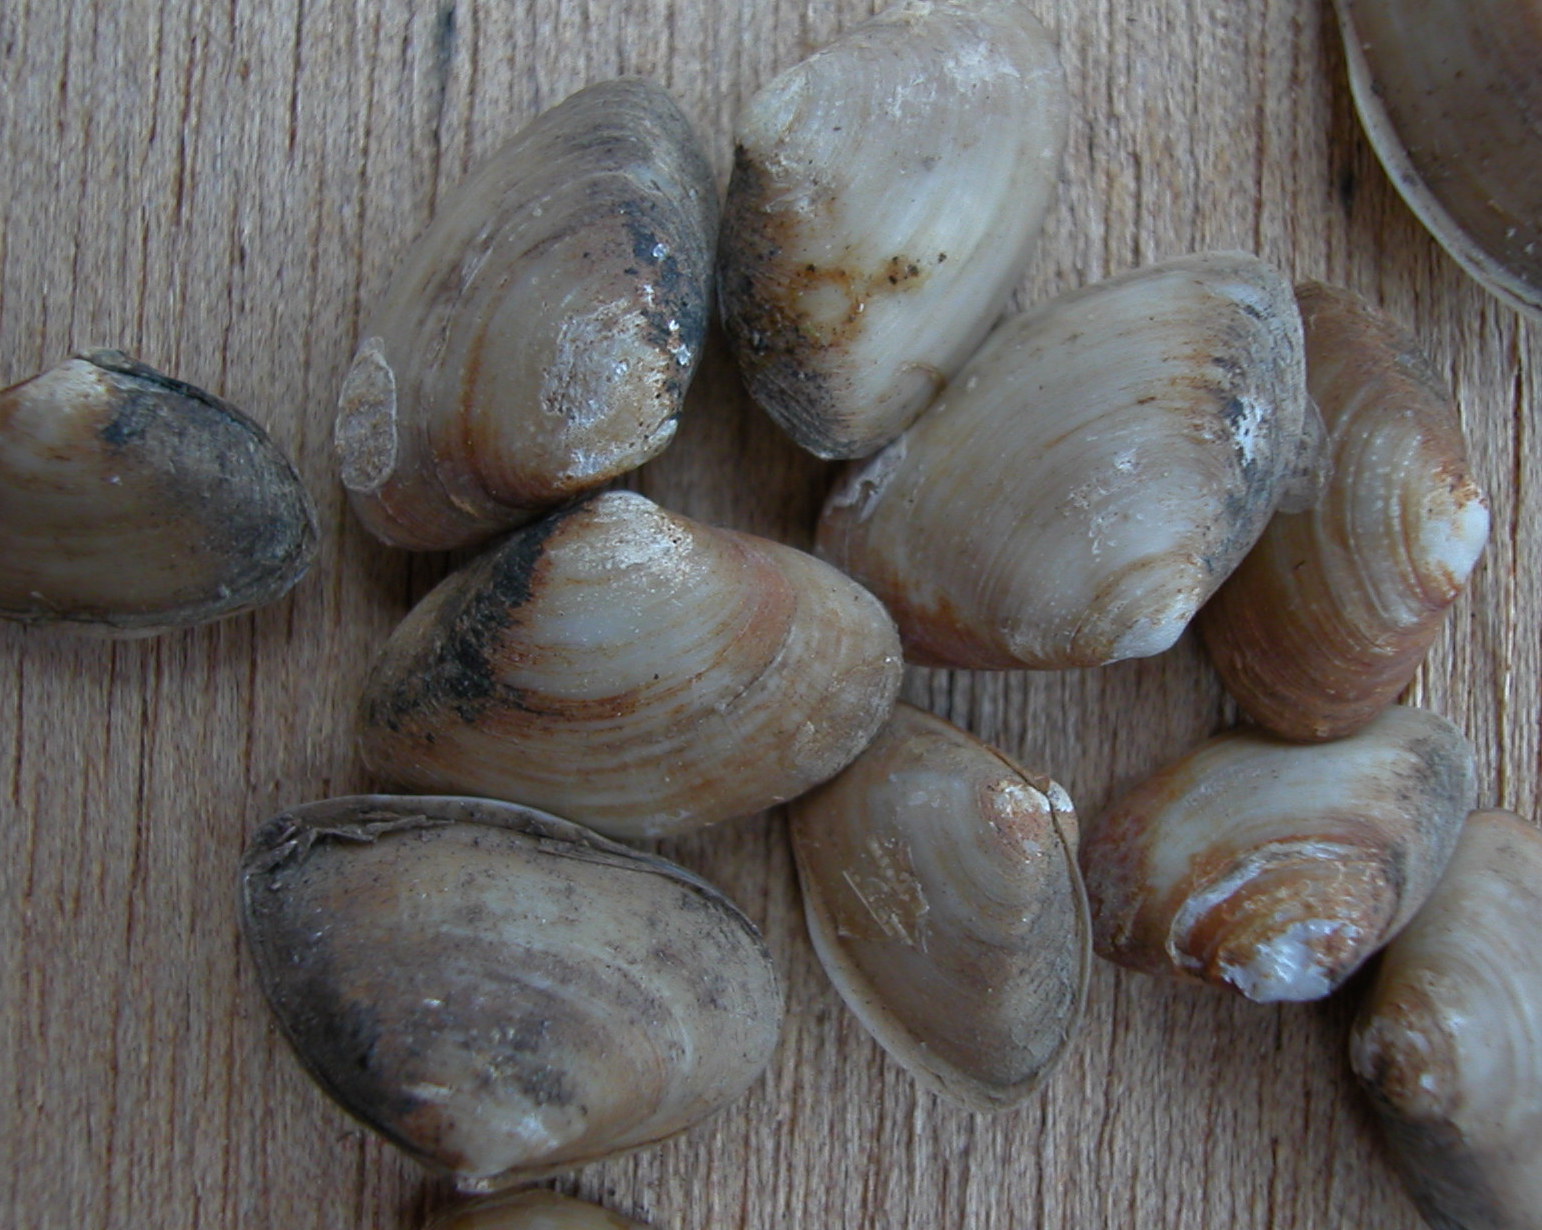 The Asian clam Potamocorbula amurensis 